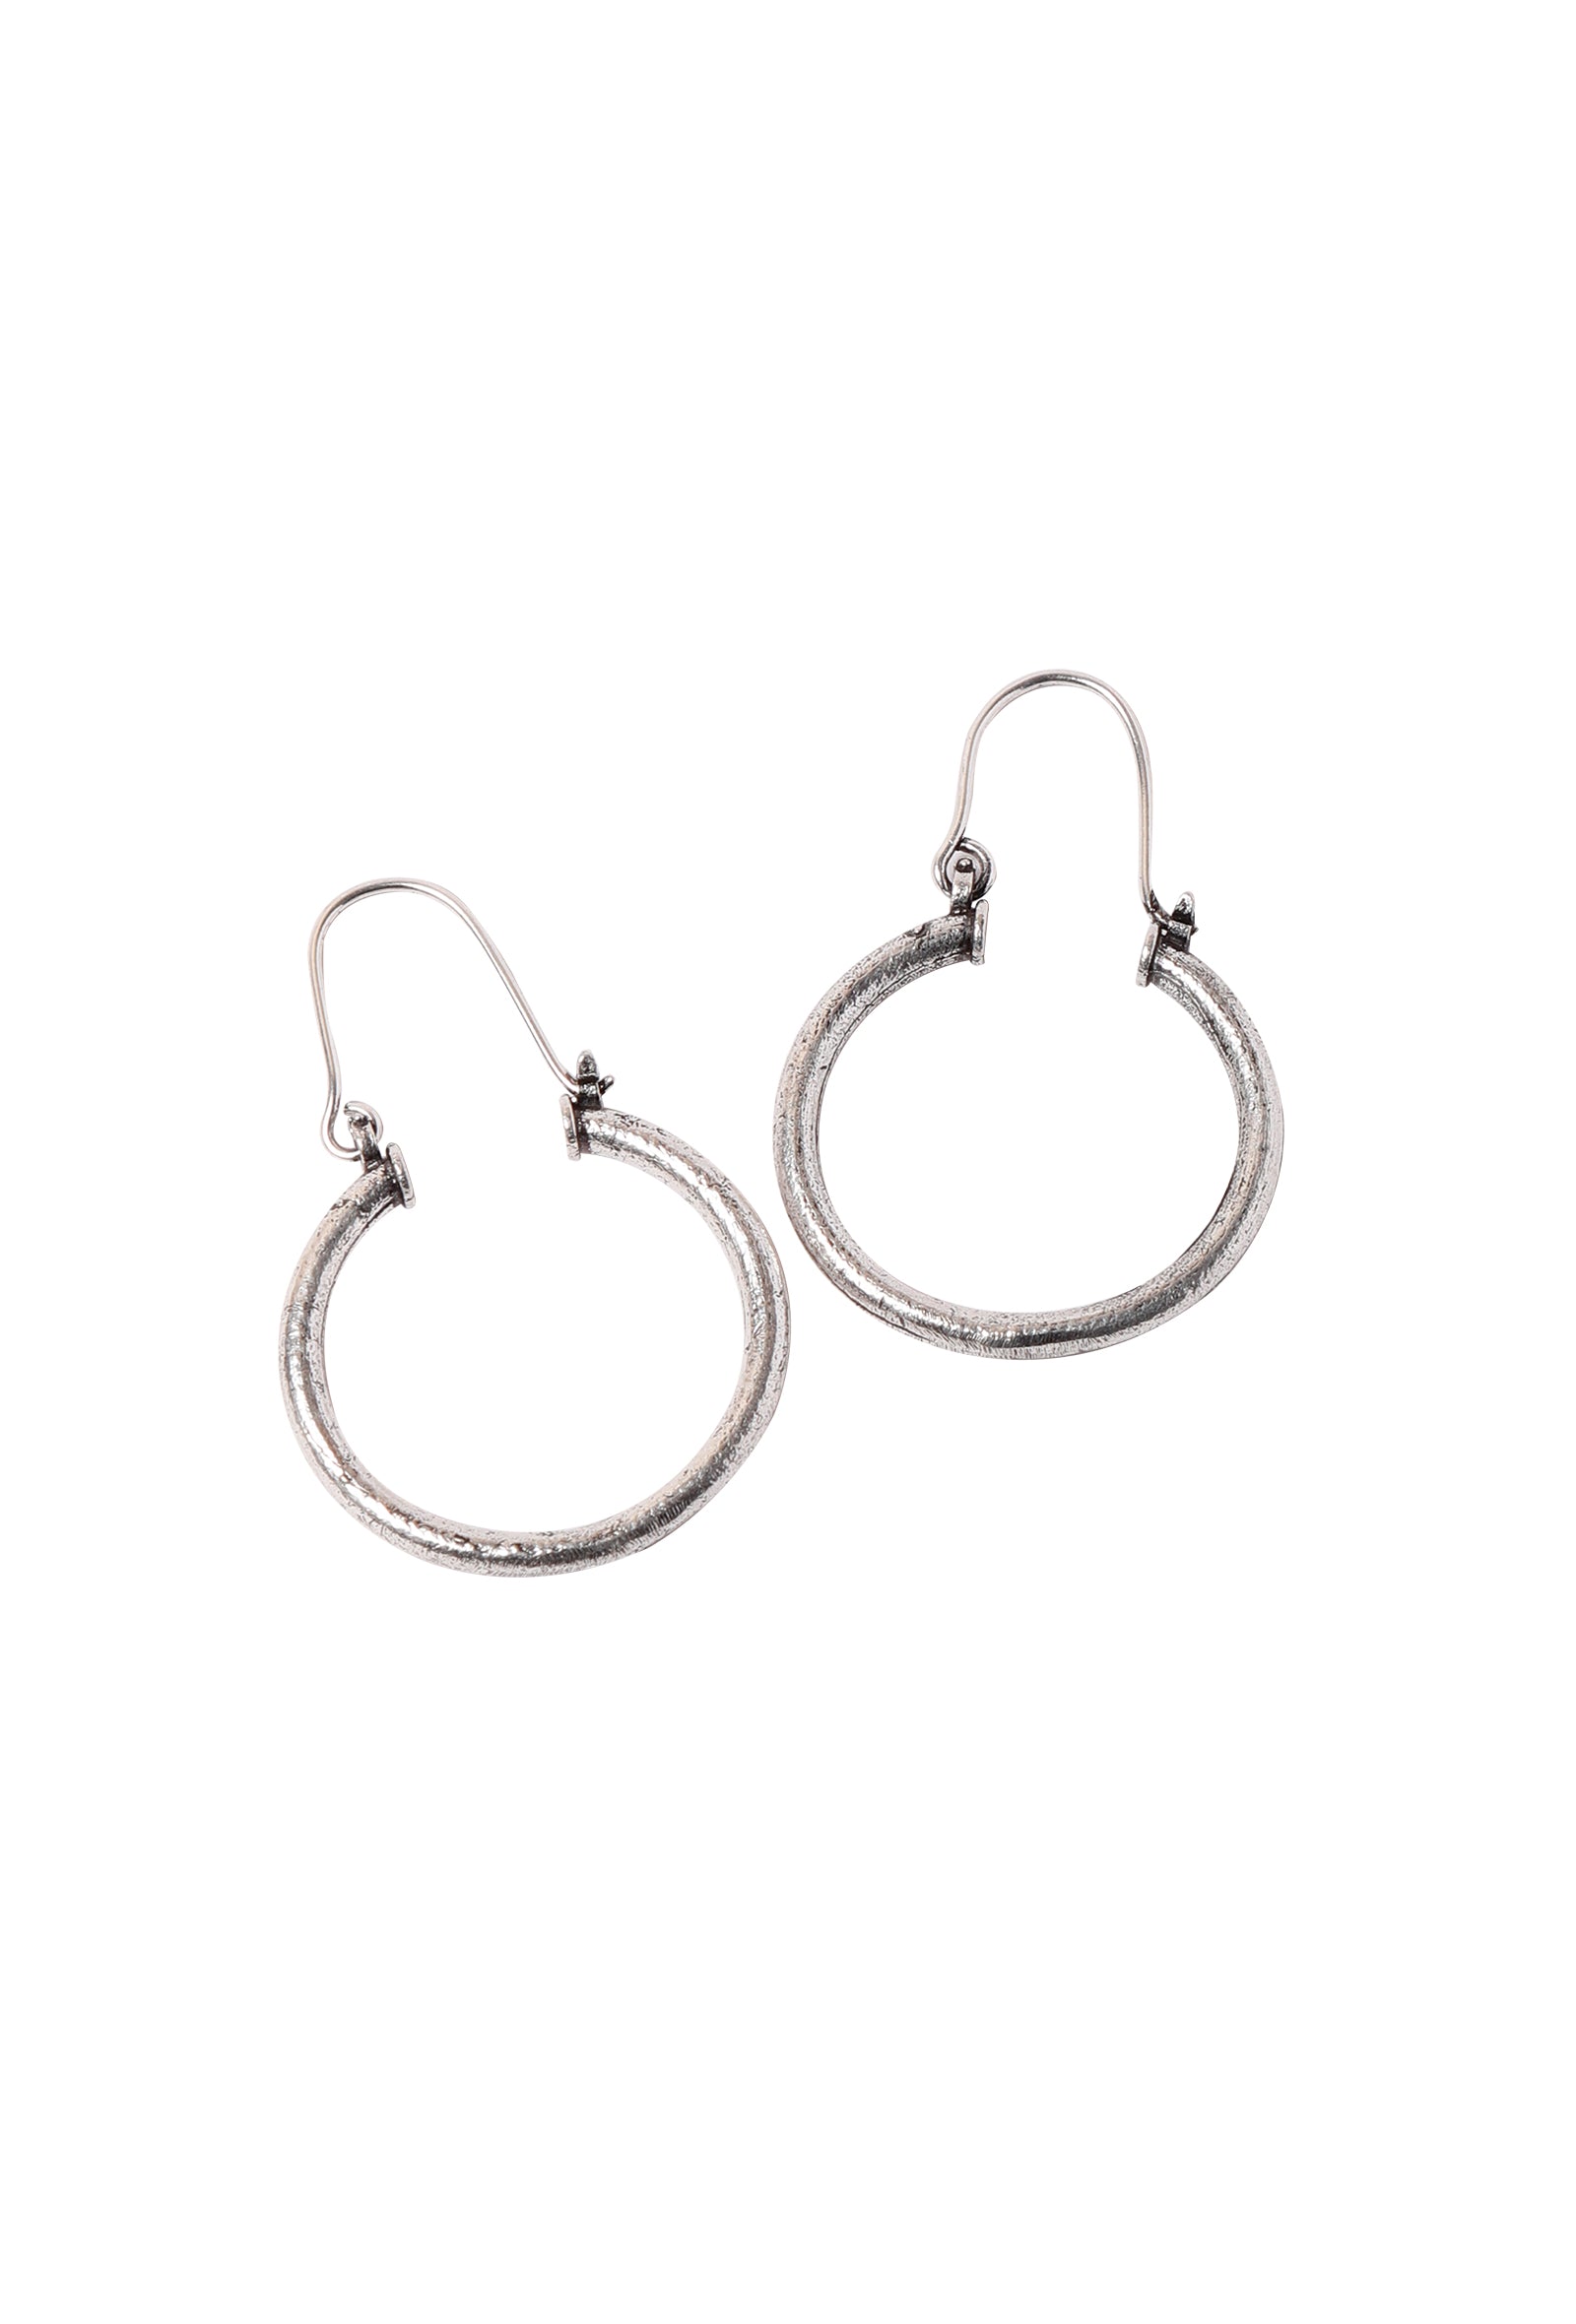 Medium Size Circular Hoop Earrings (Silver plated)